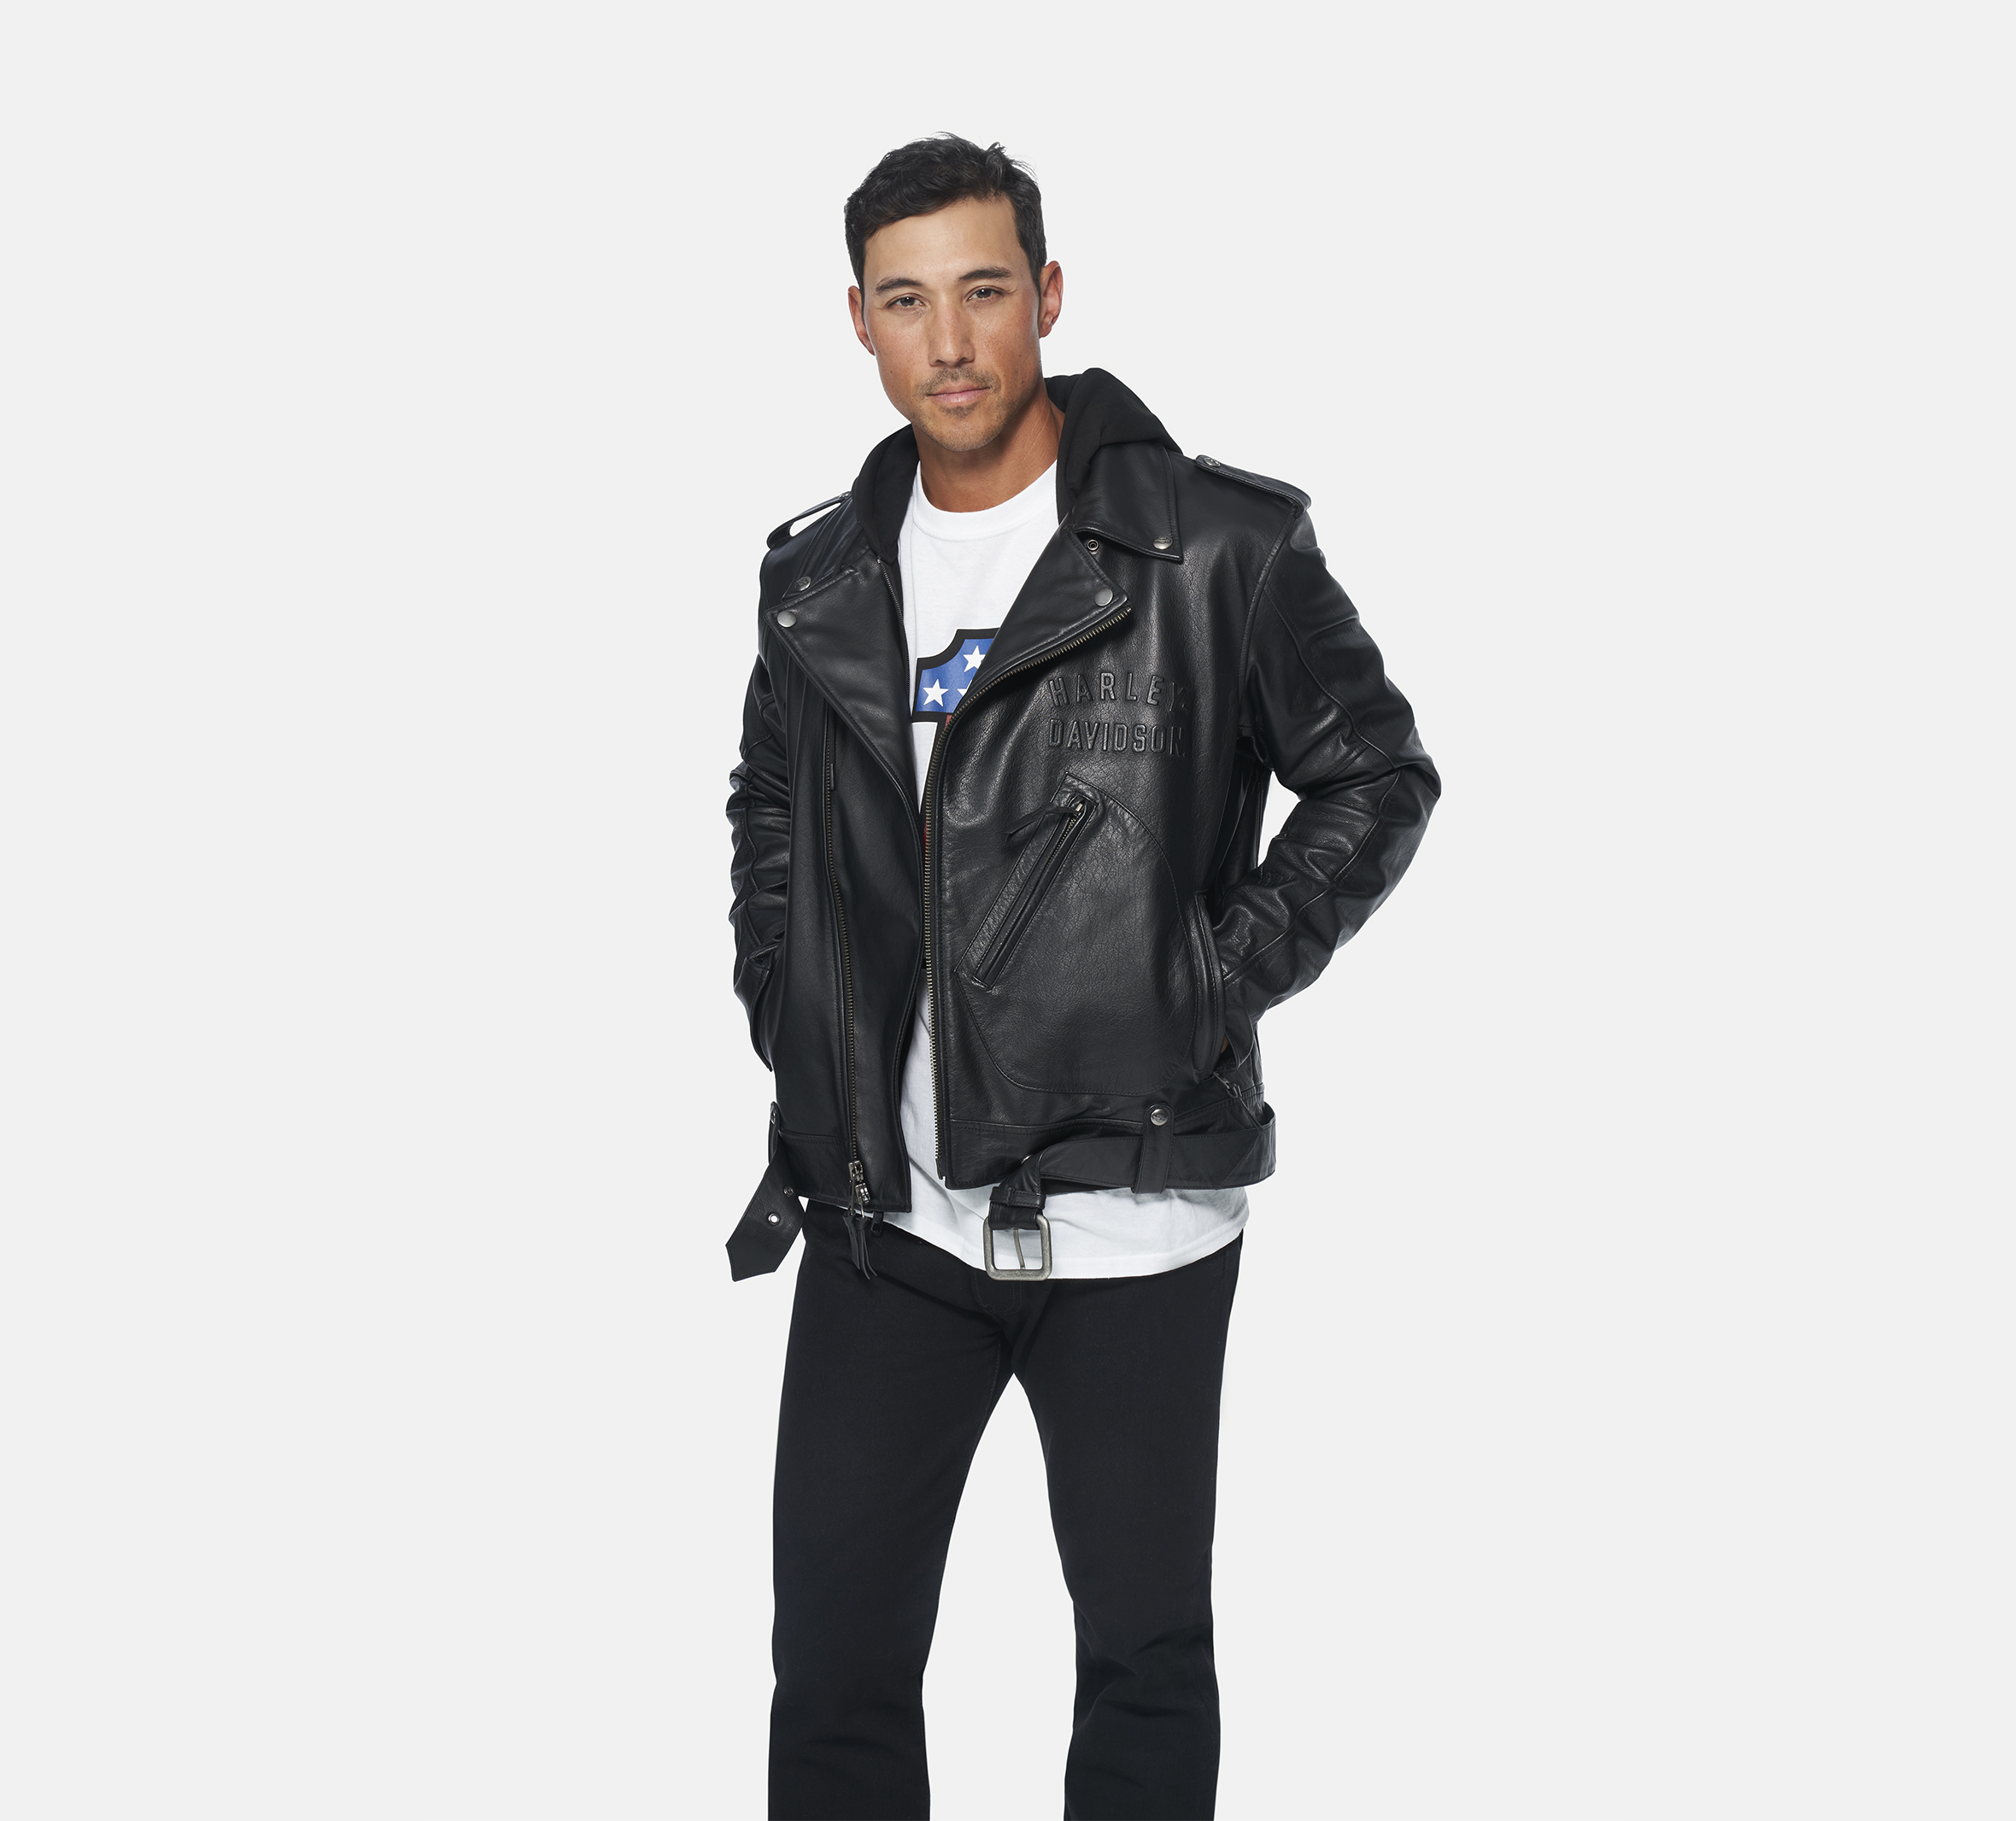 Men's Potomac 3-in-1 Leather Jacket | Harley-Davidson USA